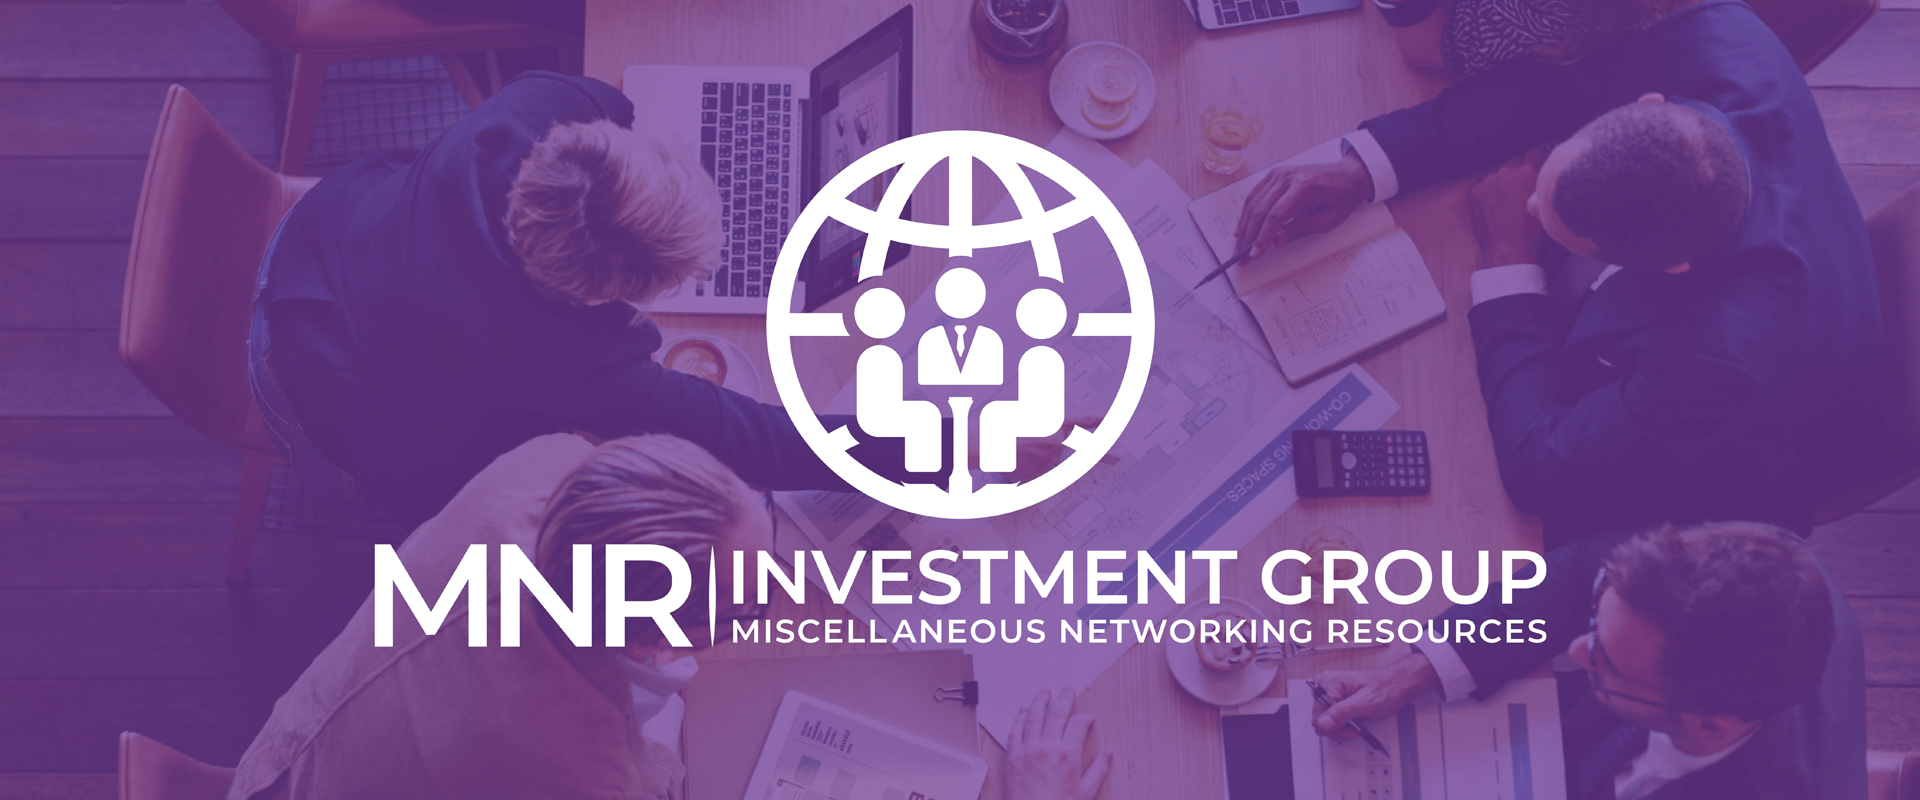 MNR Investment Group